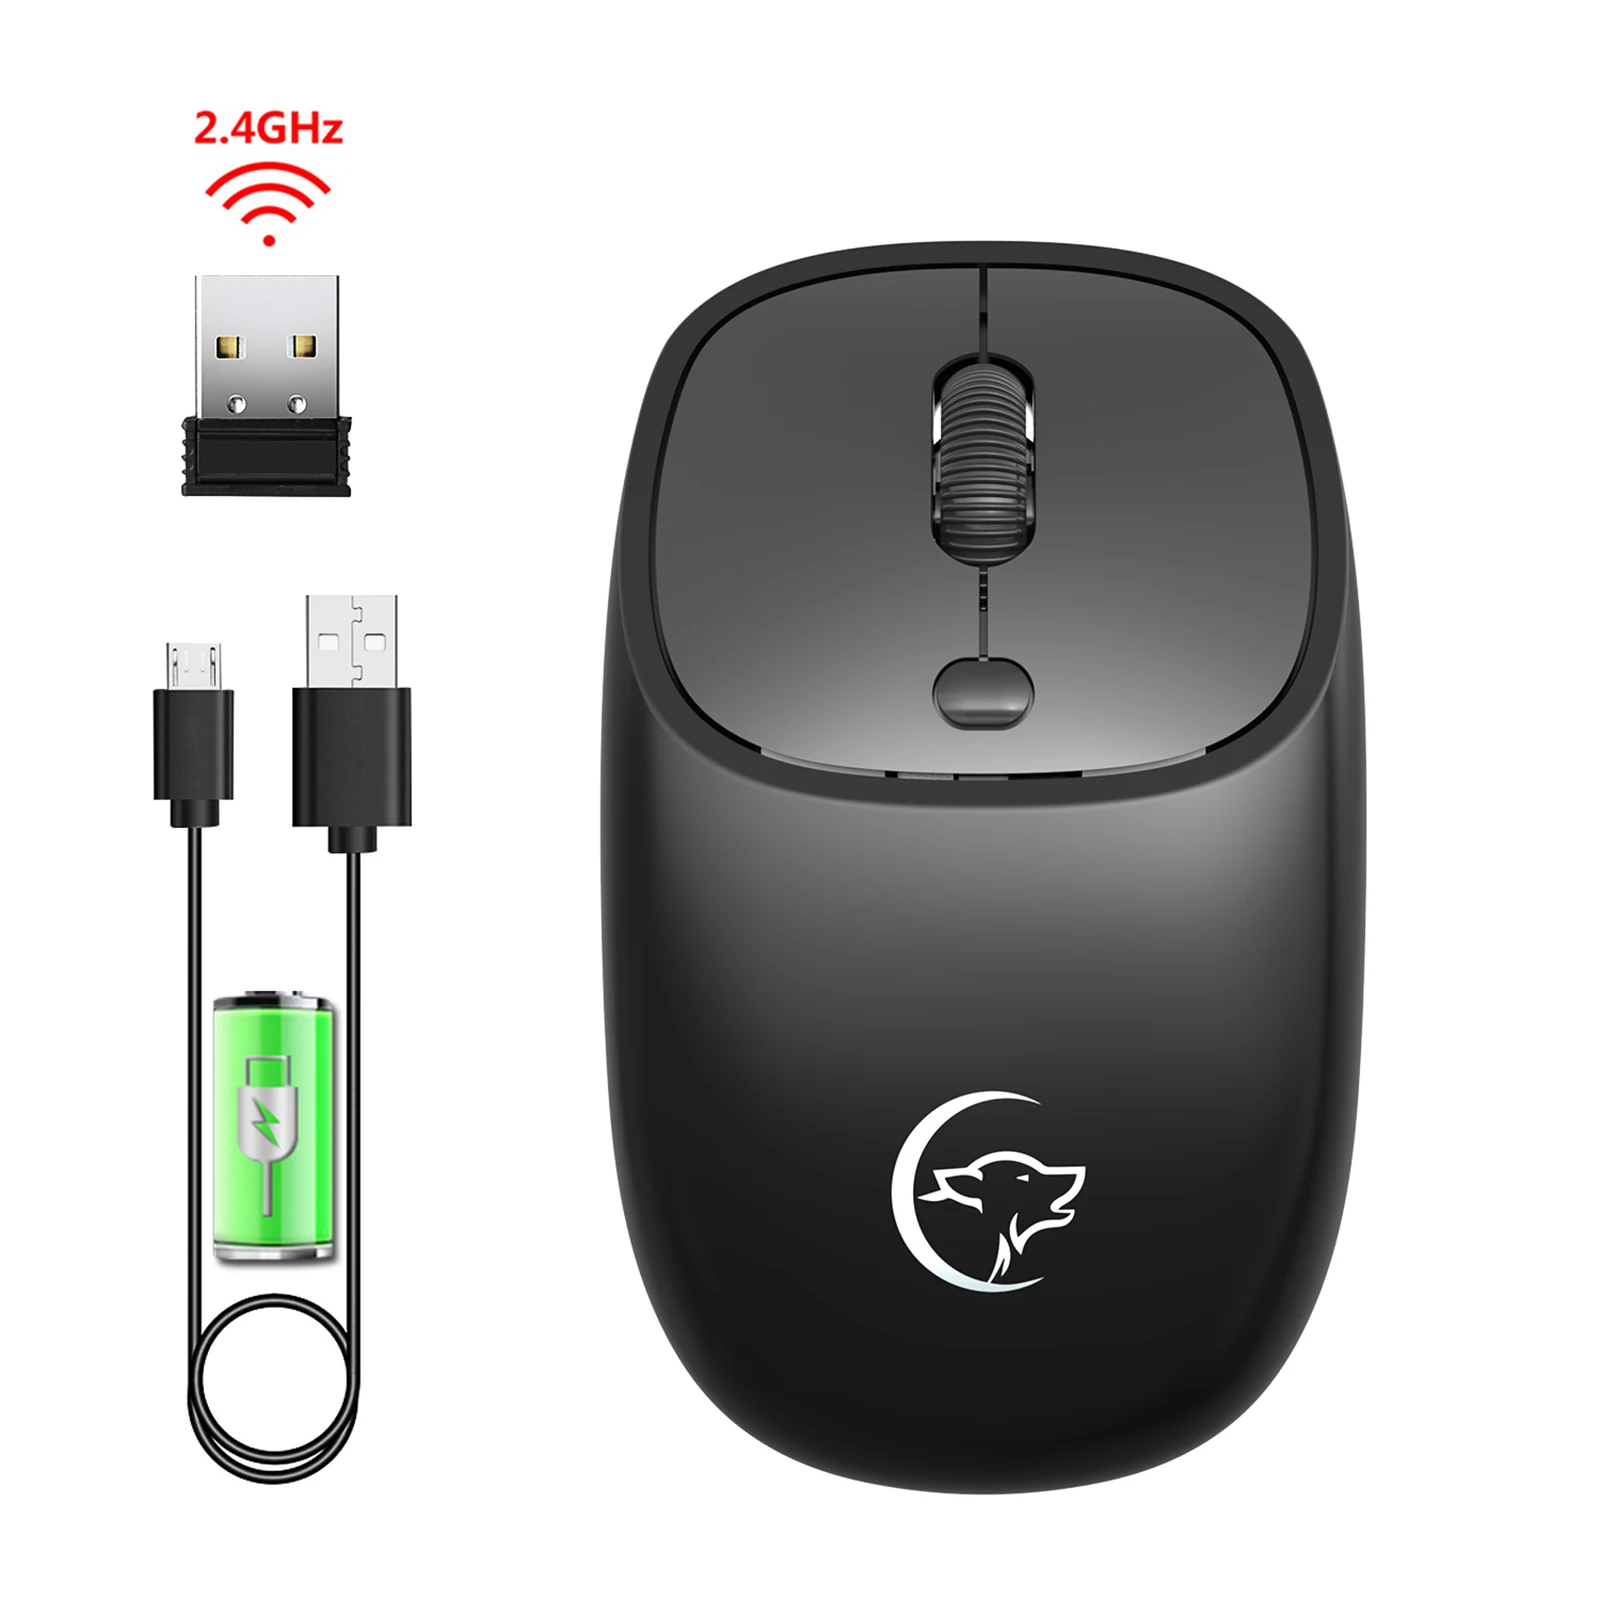 Portable 2.4G Wireless Optical Mouse 3 Button Computer Mice w/USB Receiver for Desktop Laptop